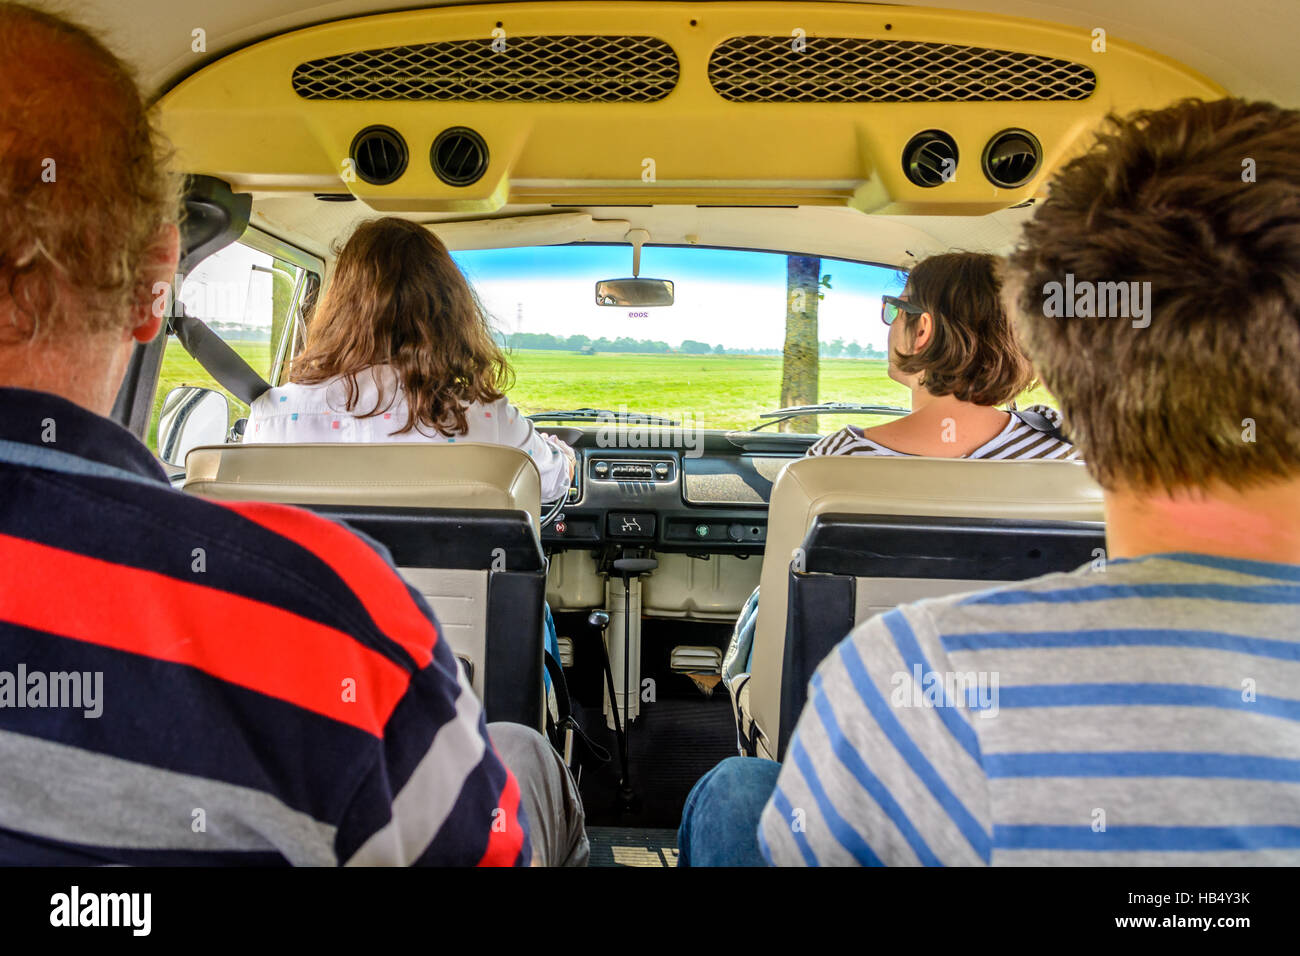 A Road trip in a vintage VW van Stock Photo